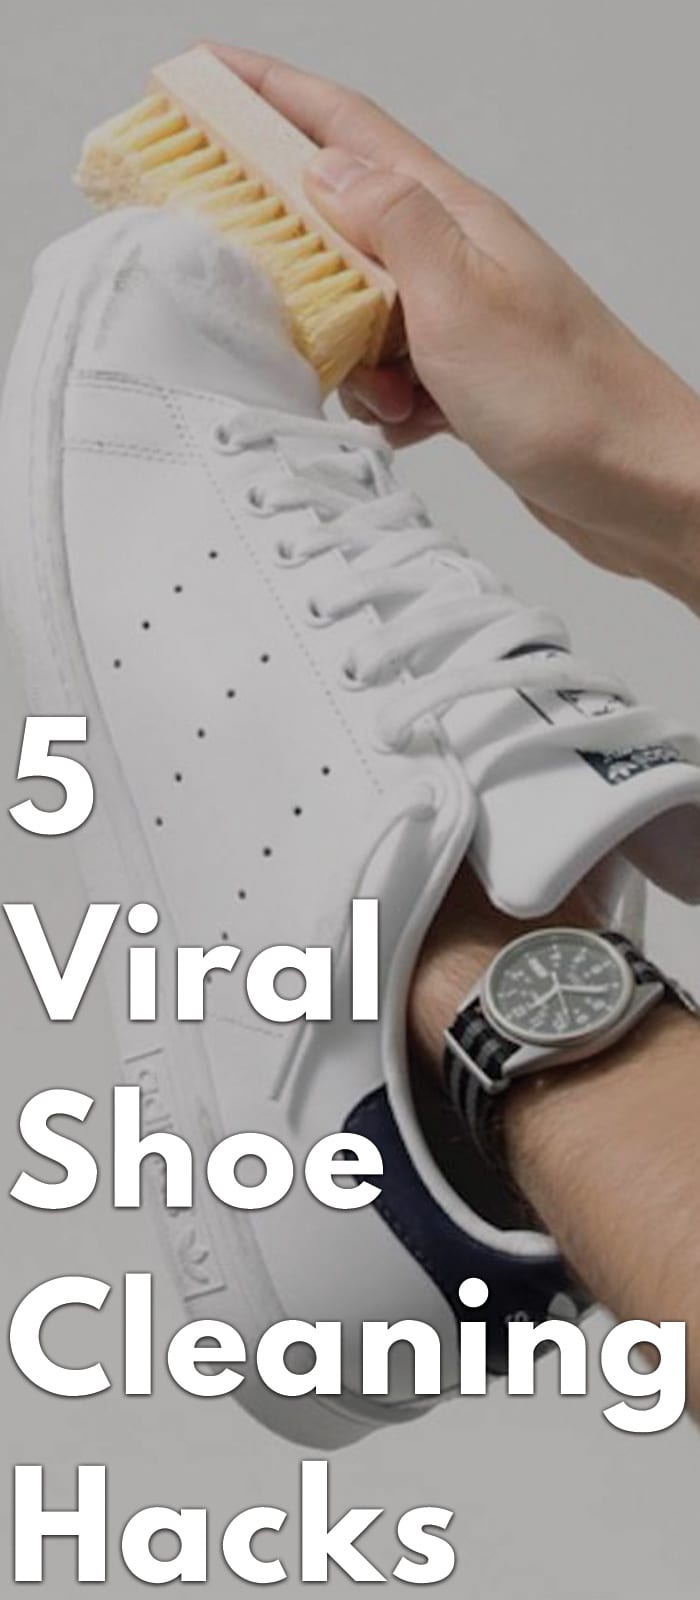 5 Viral Shoe Cleaning Hacks